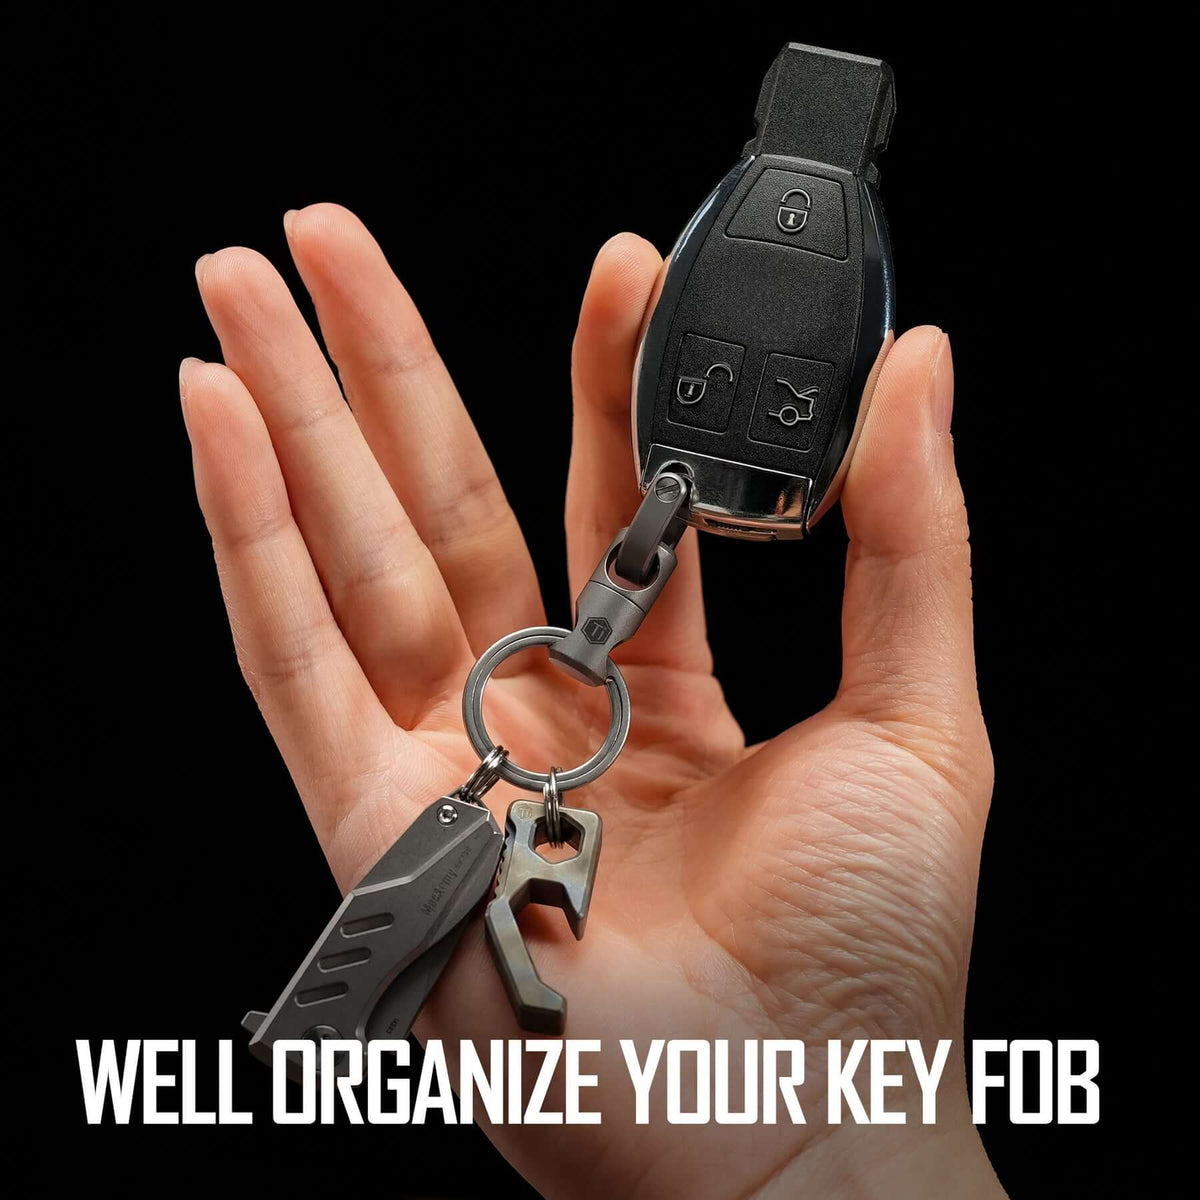 KM13 Titanium Alloy Keychain Key Ring Connector